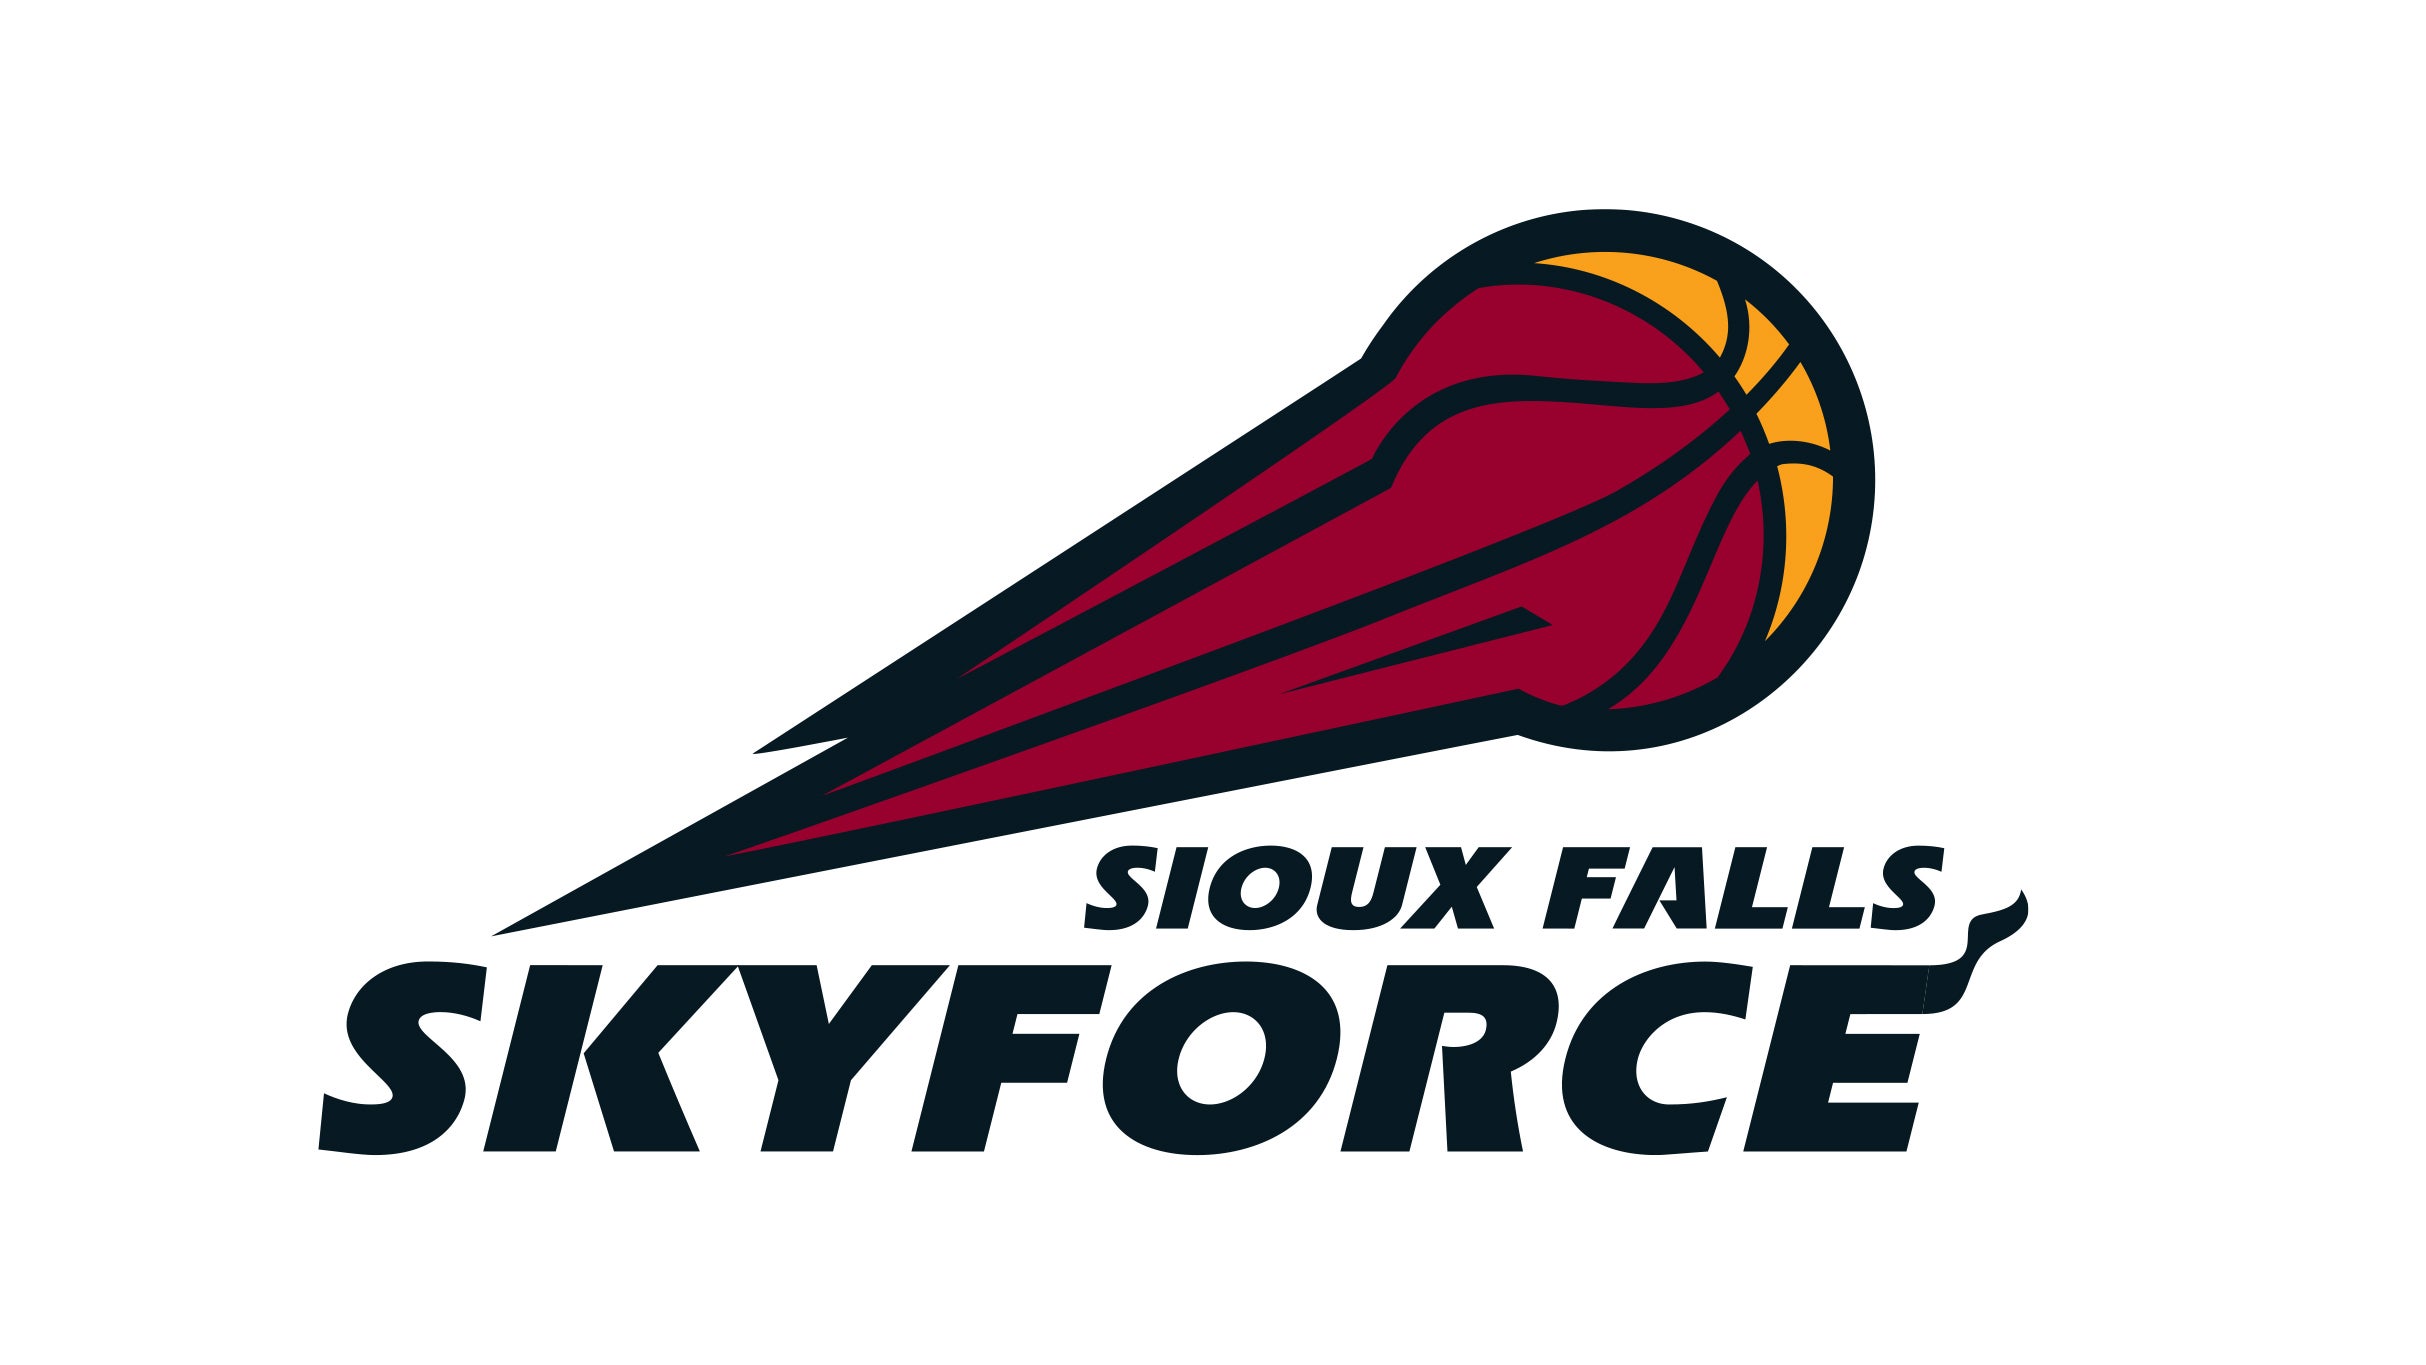 Sioux Falls Skyforce vs. Mexico City Capitanes - Sioux Falls, SD 57107